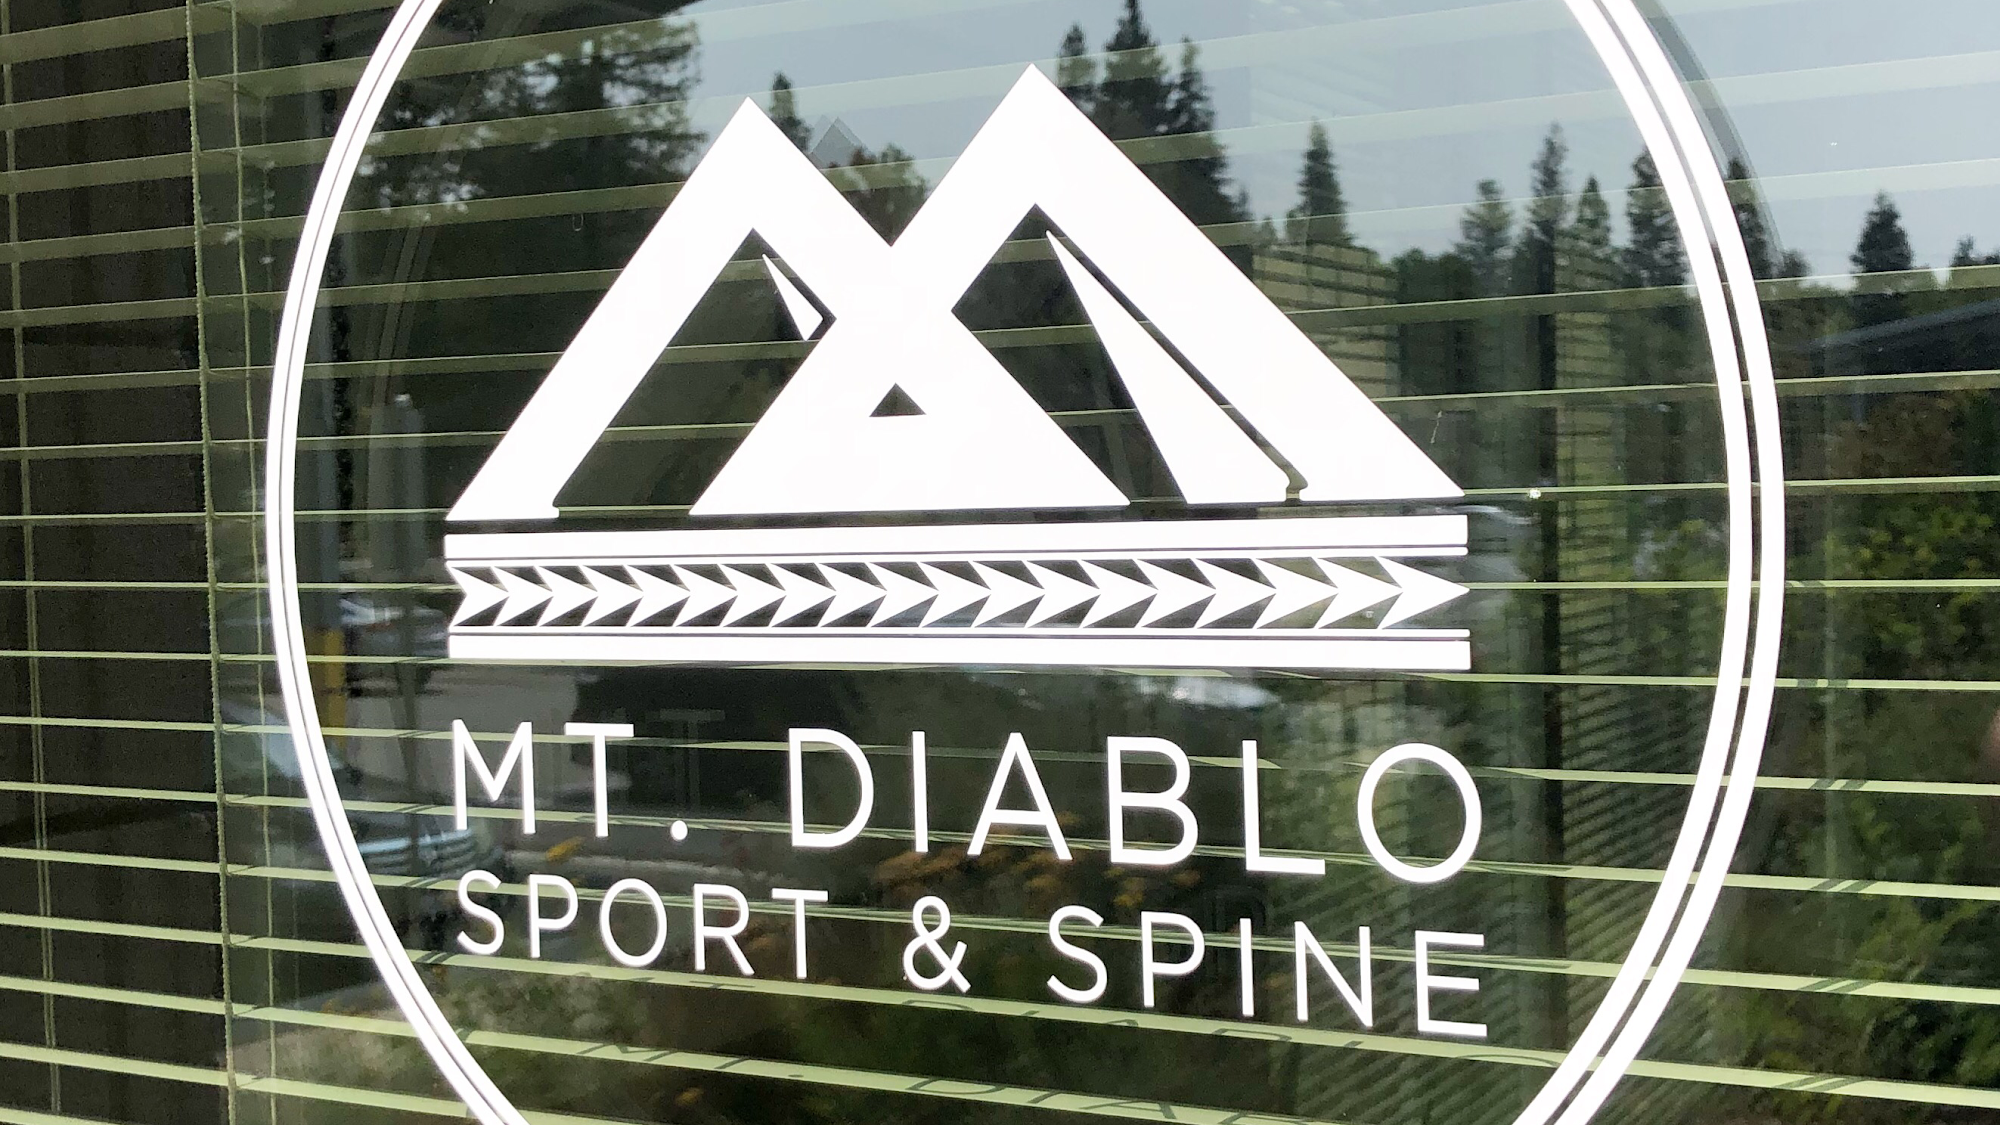 Mt. Diablo Sport and Spine